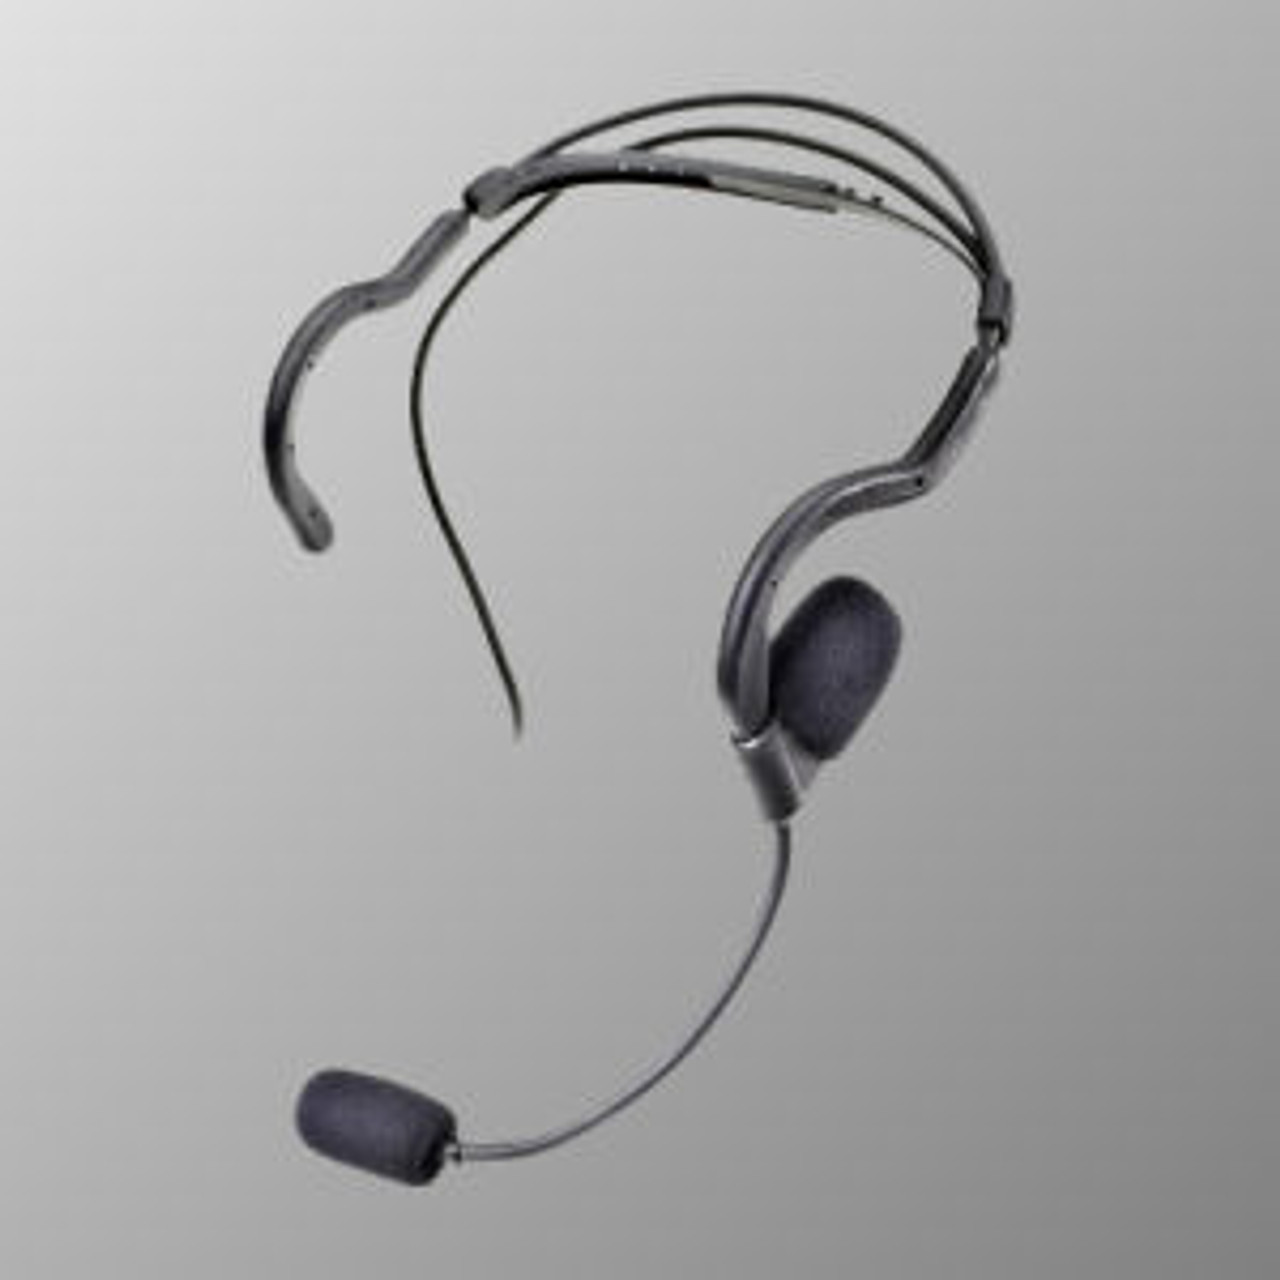 ICOM IC-F24S Tactical Noise Canceling Single Muff Headset